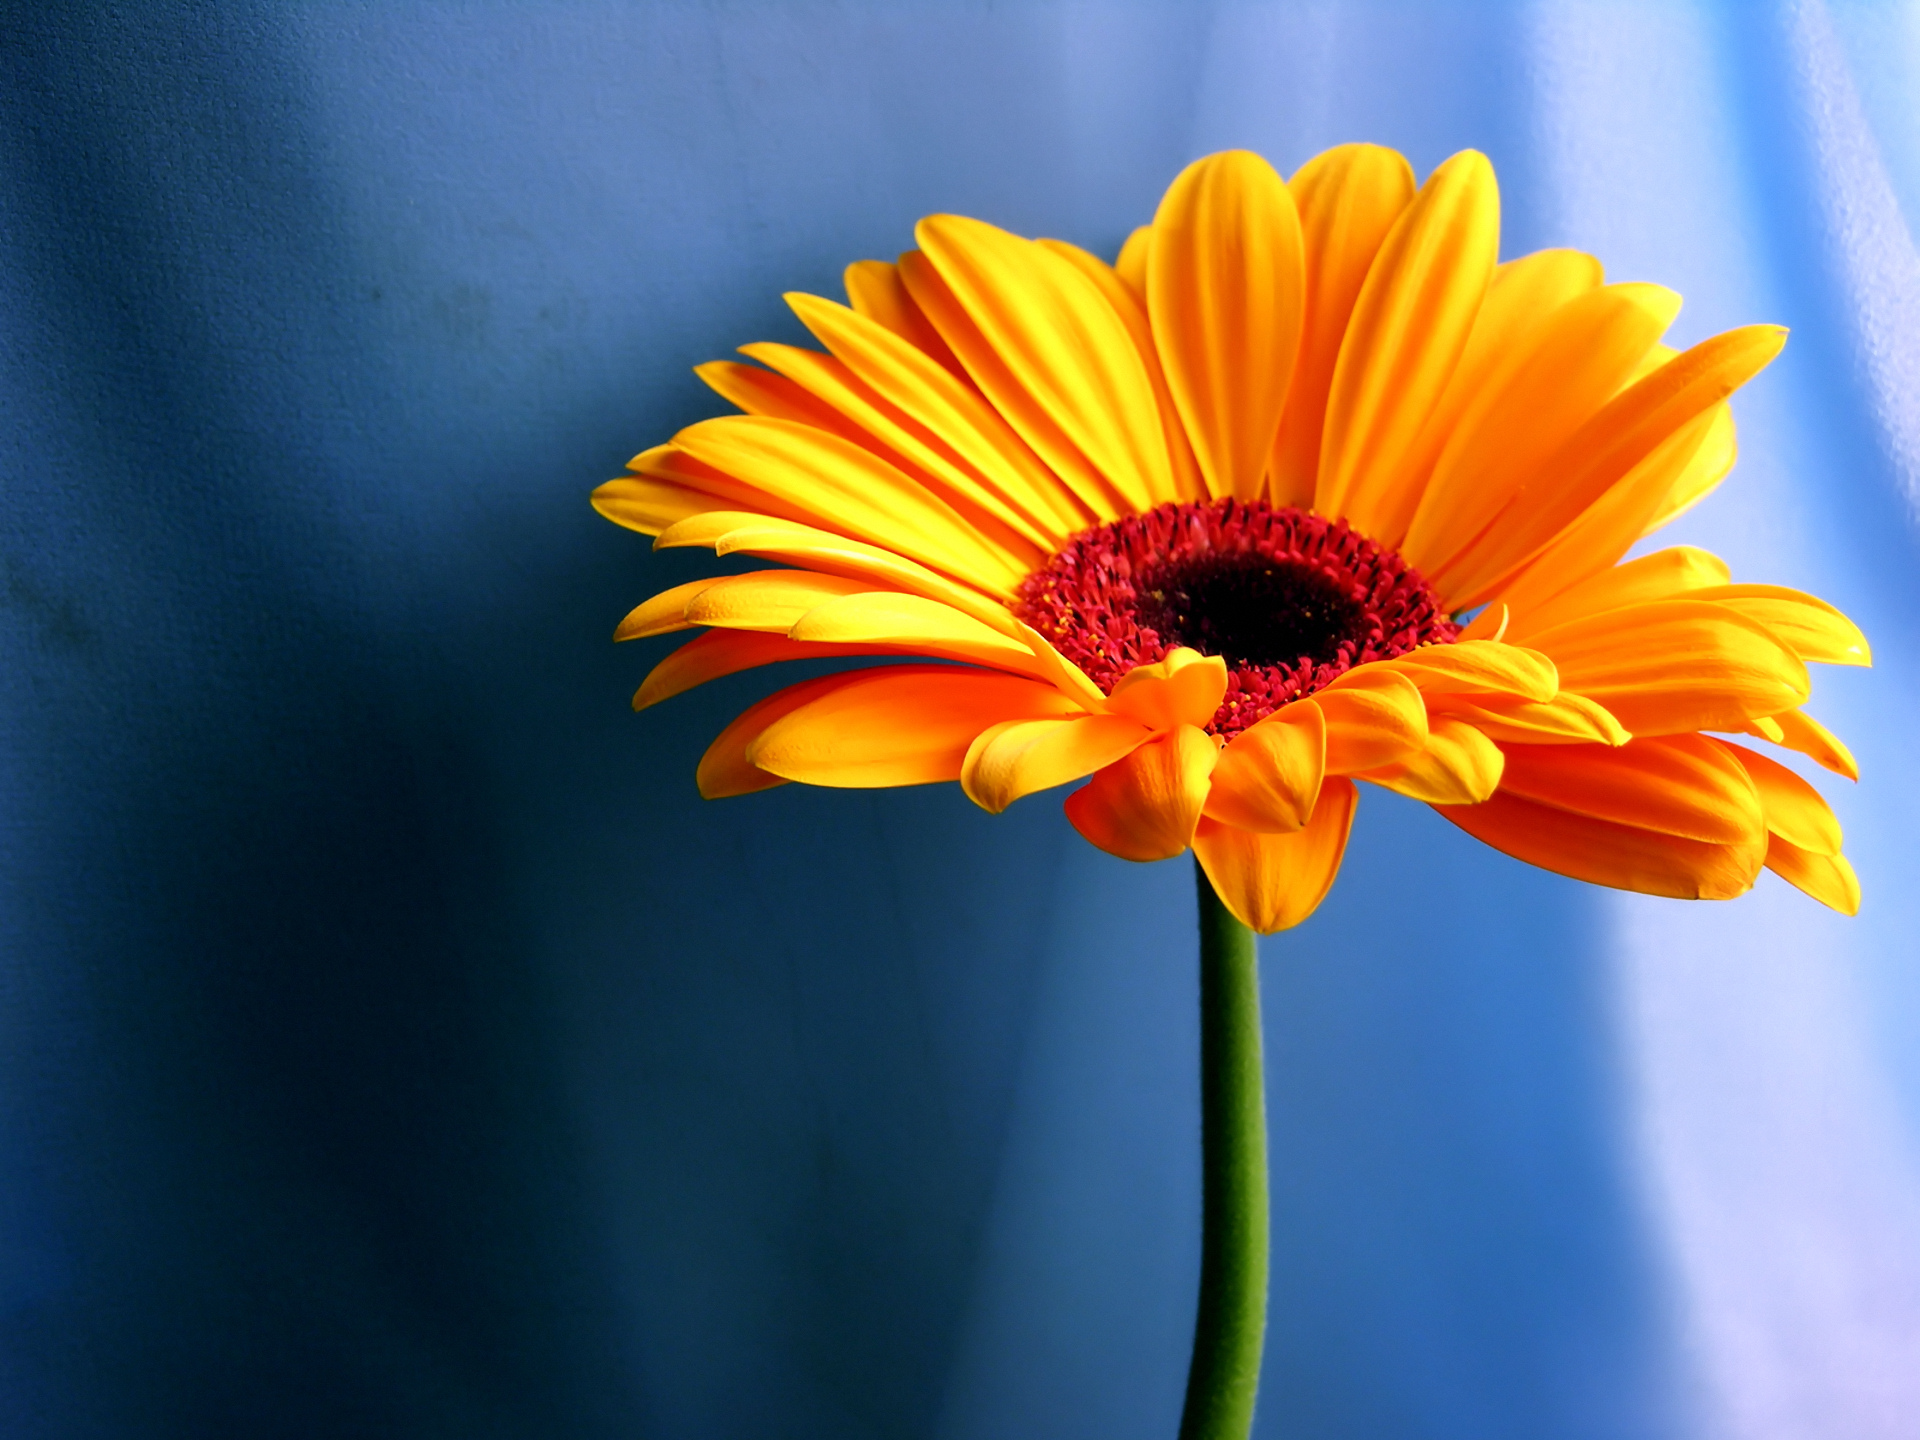 wallpaper hd 1080p free download,flower,flowering plant,barberton daisy,petal,orange